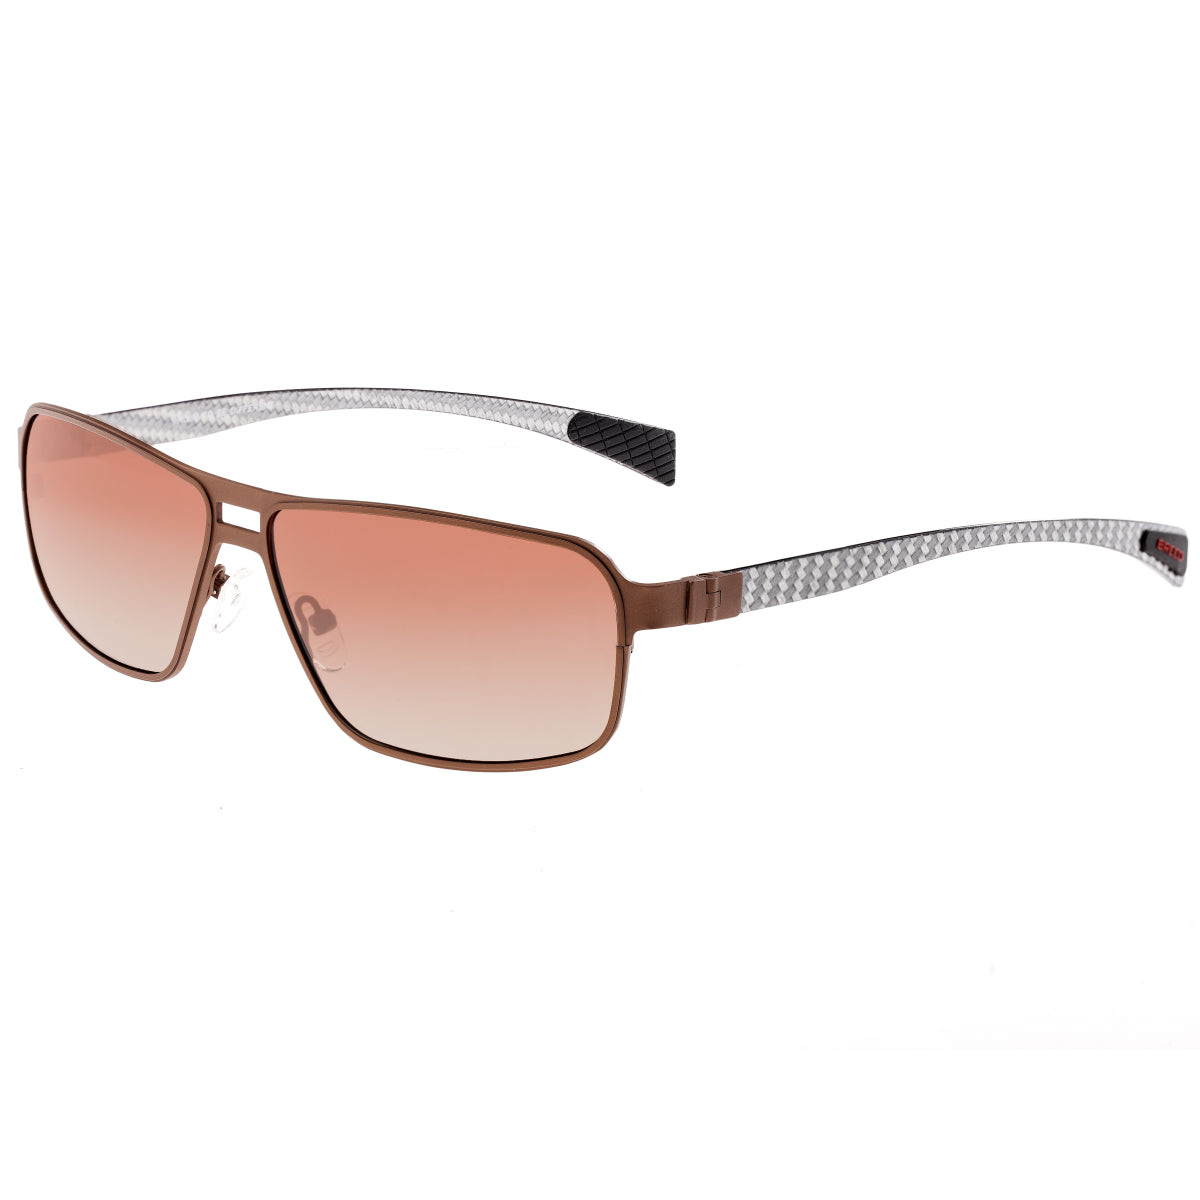 Breed Meridian Titanium and Carbon Fiber Polarized Sunglasses - Brown/Brown - BSG003BN